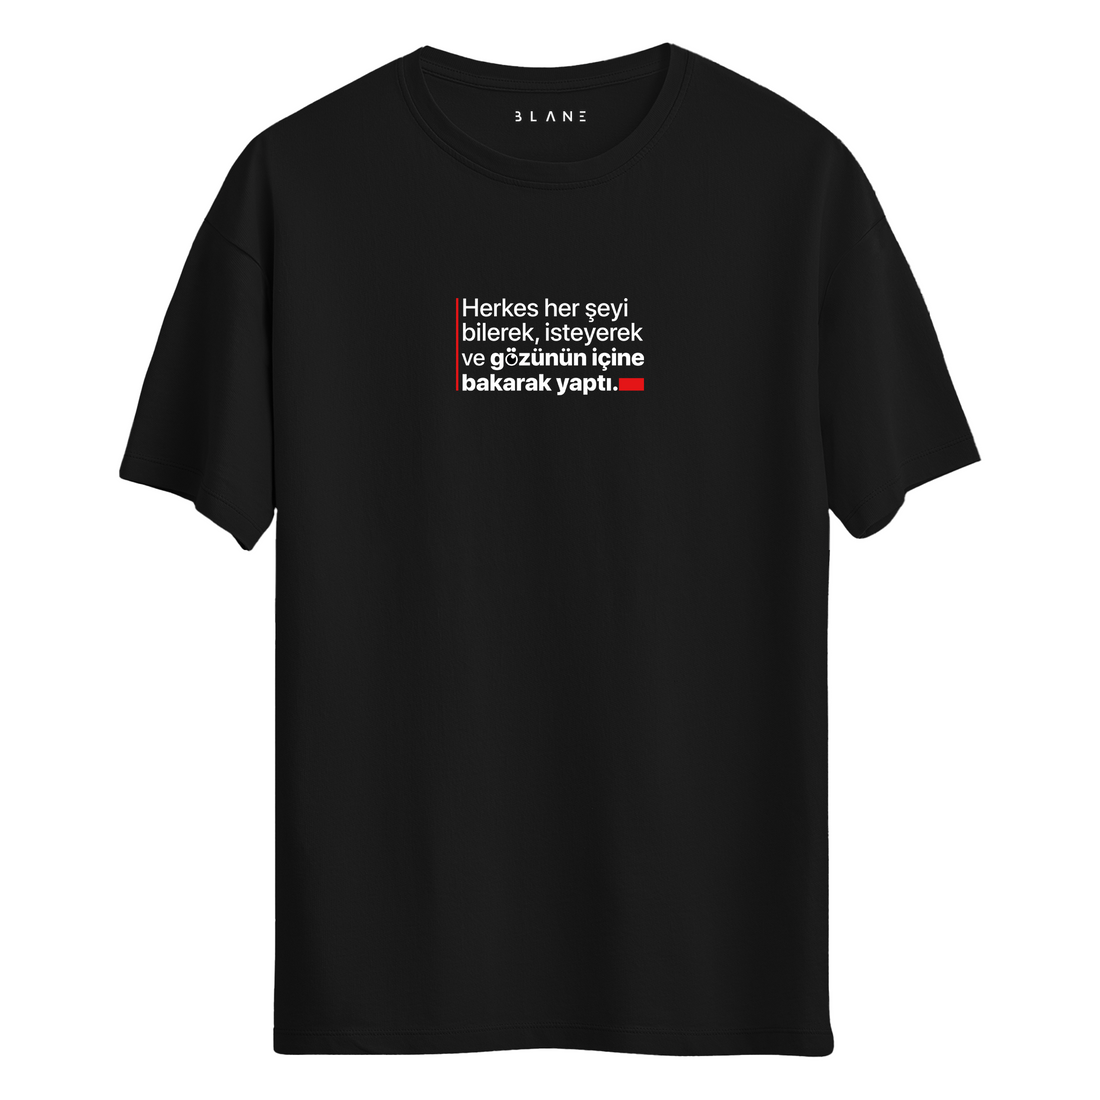 Herkes Her Şeyi Bilerek Yaptı - T-Shirt